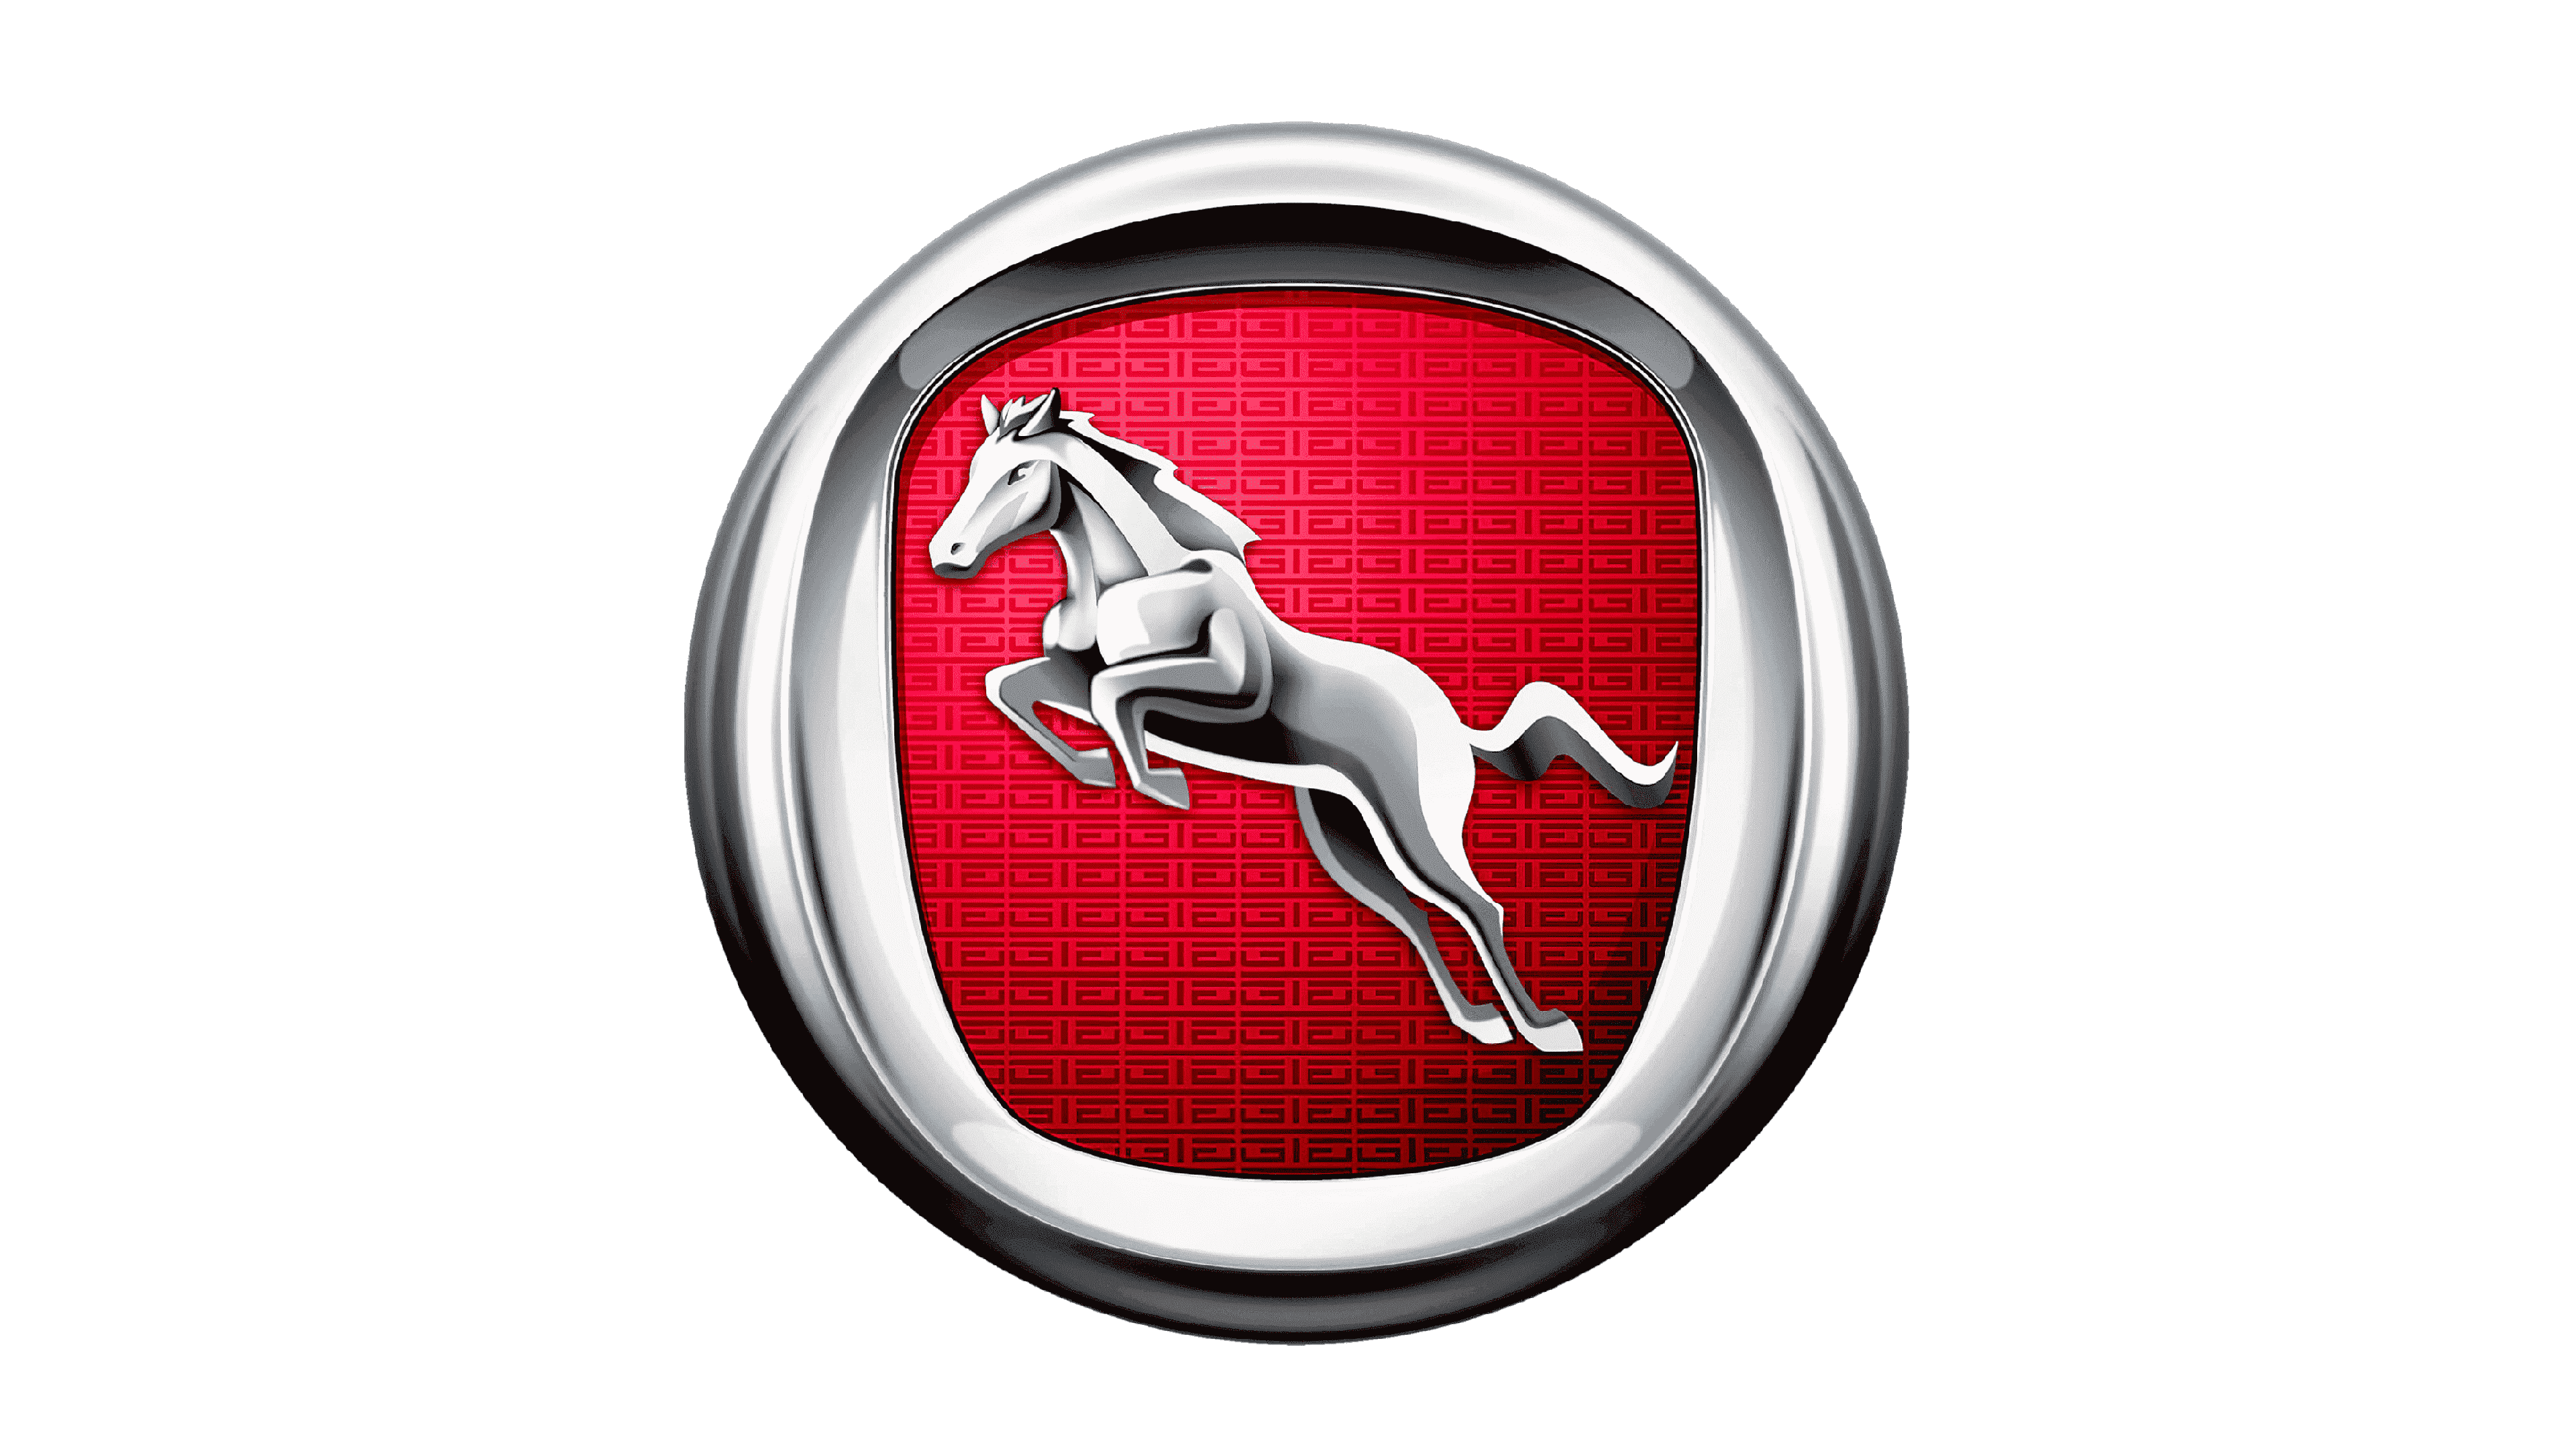 Car Logos with Horse